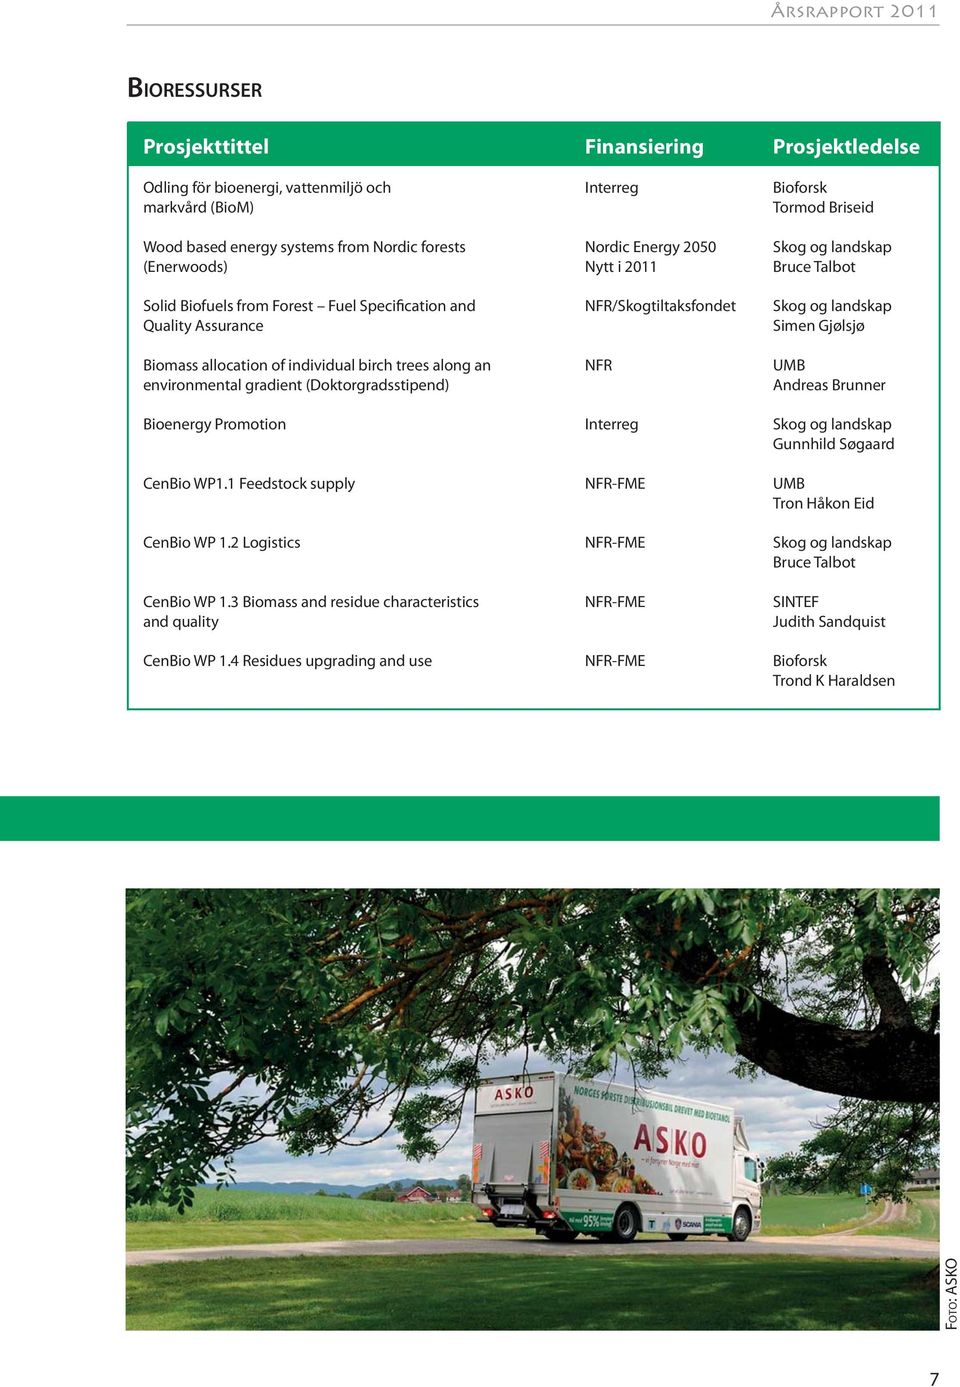 Gjølsjø Biomass allocation of individual birch trees along an NFR UMB environmental gradient (Doktorgradsstipend) Andreas Brunner Bioenergy Promotion Interreg Skog og landskap Gunnhild Søgaard CenBio